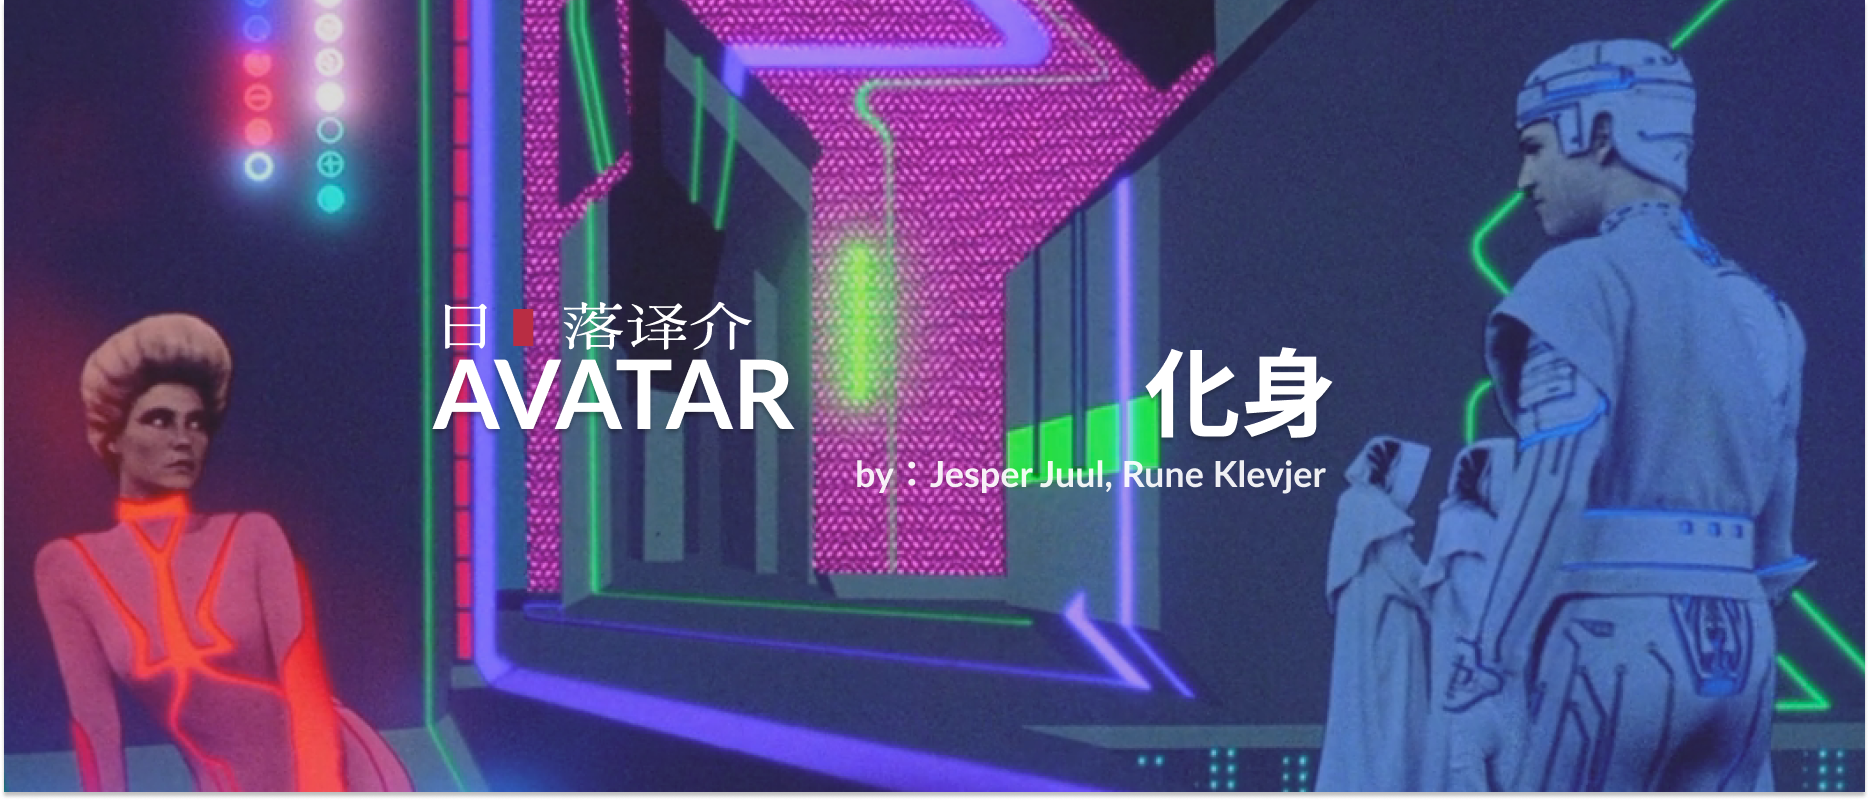 Jesper Juul, Rune Klevjer 化身 Avatar (2016)